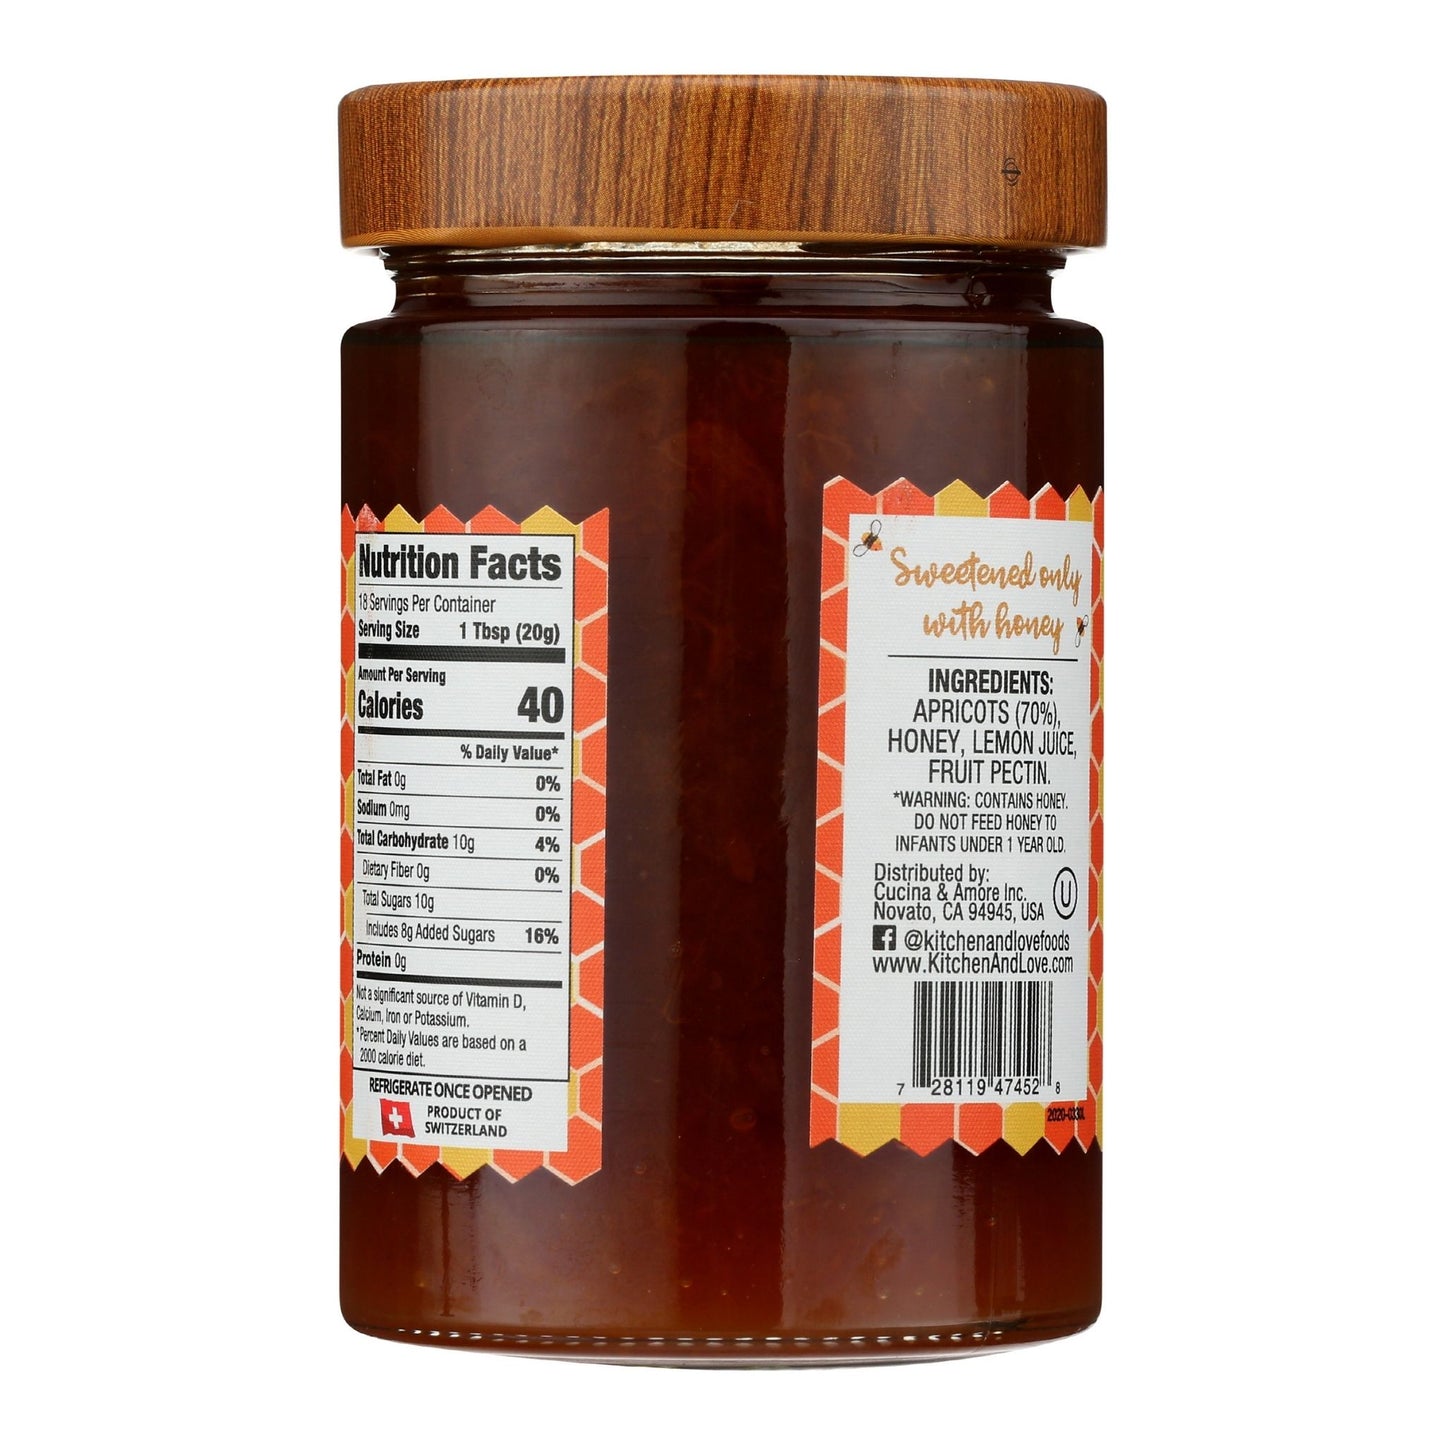 Apricot & Honey Preserve - 4 Pack